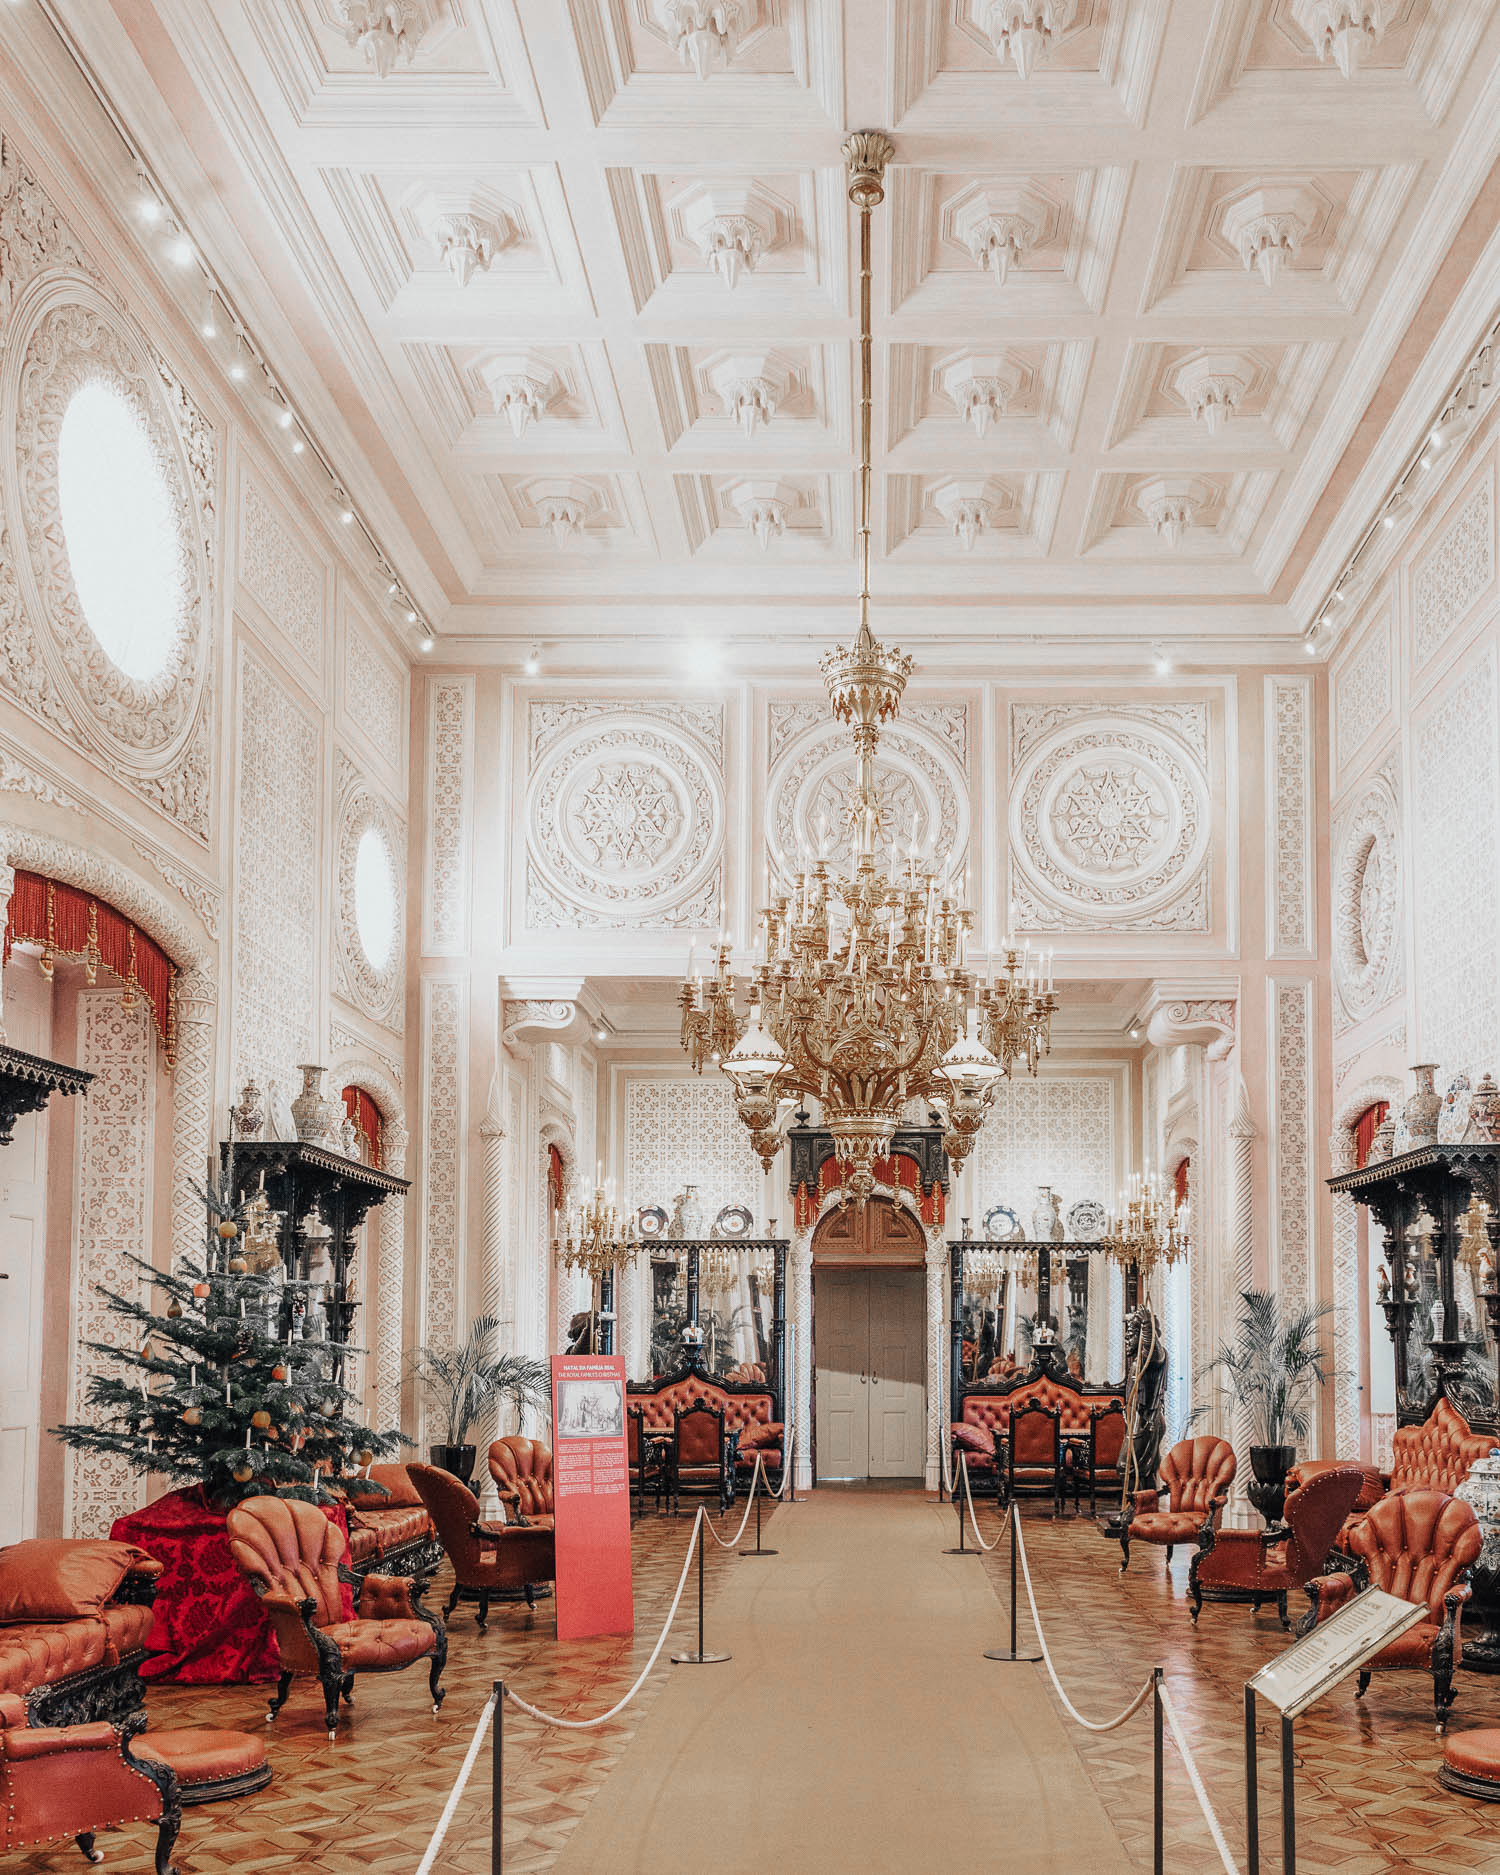 Grand room inside Pena Palace, Portugal